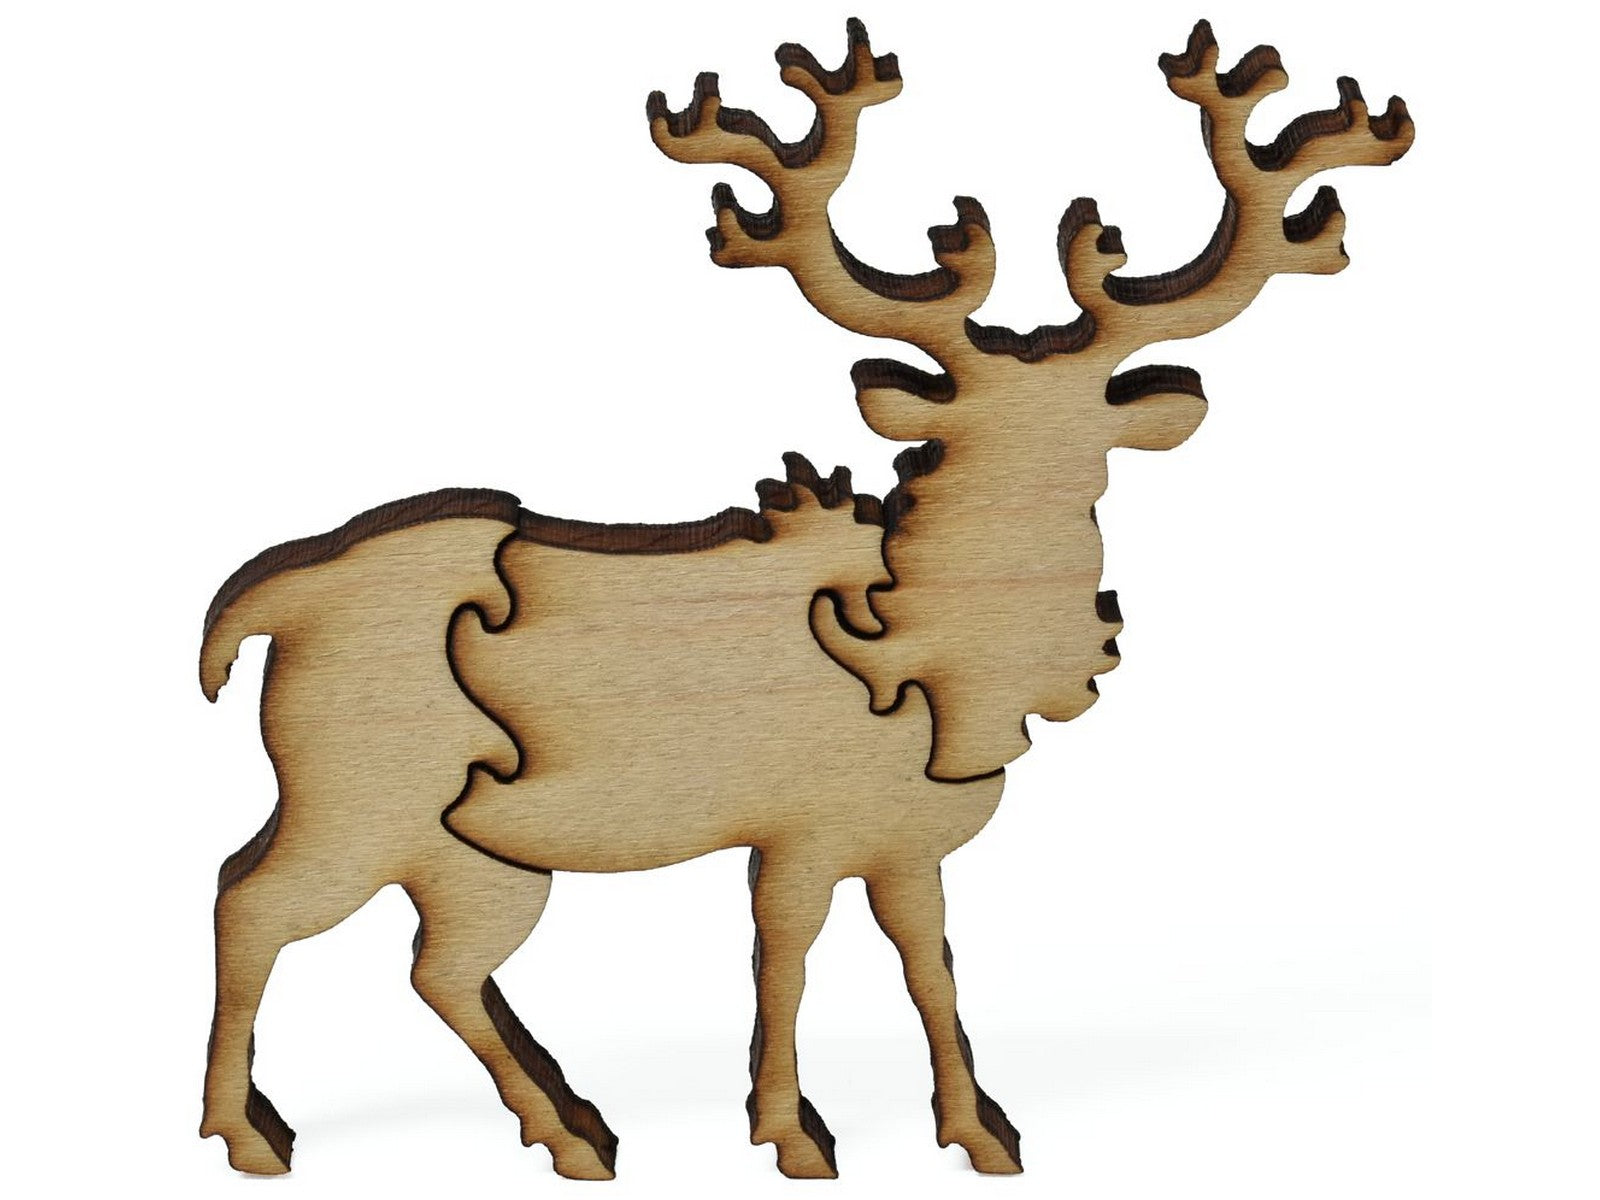 A closeup of pieces that make a reindeer.